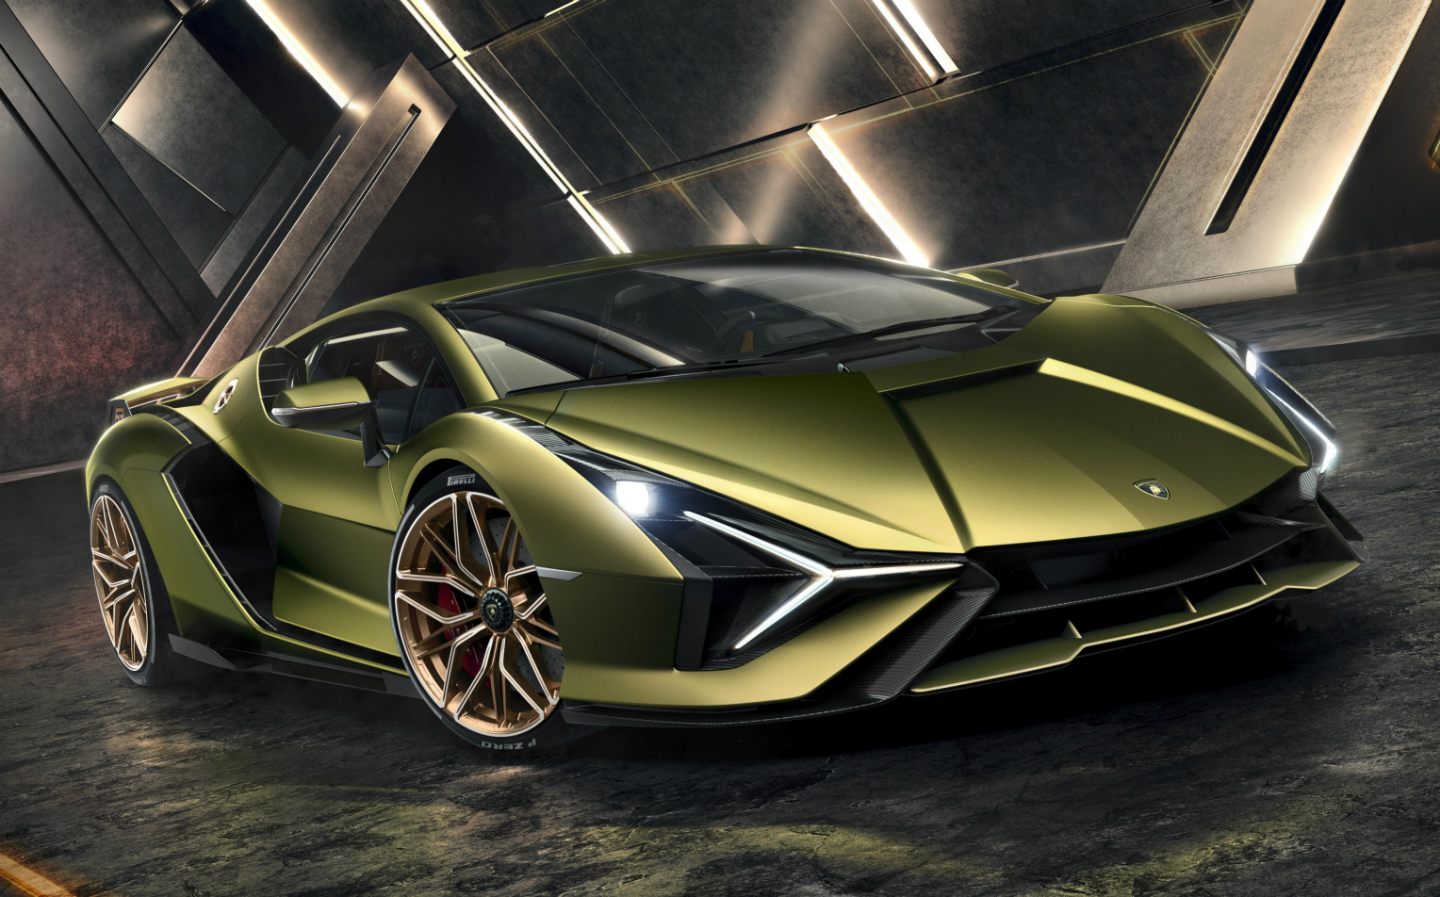 2019 Frankfurt Motor Show reveal 2019 Lamborghini Sian FKP 37 Hybrid Hypercar